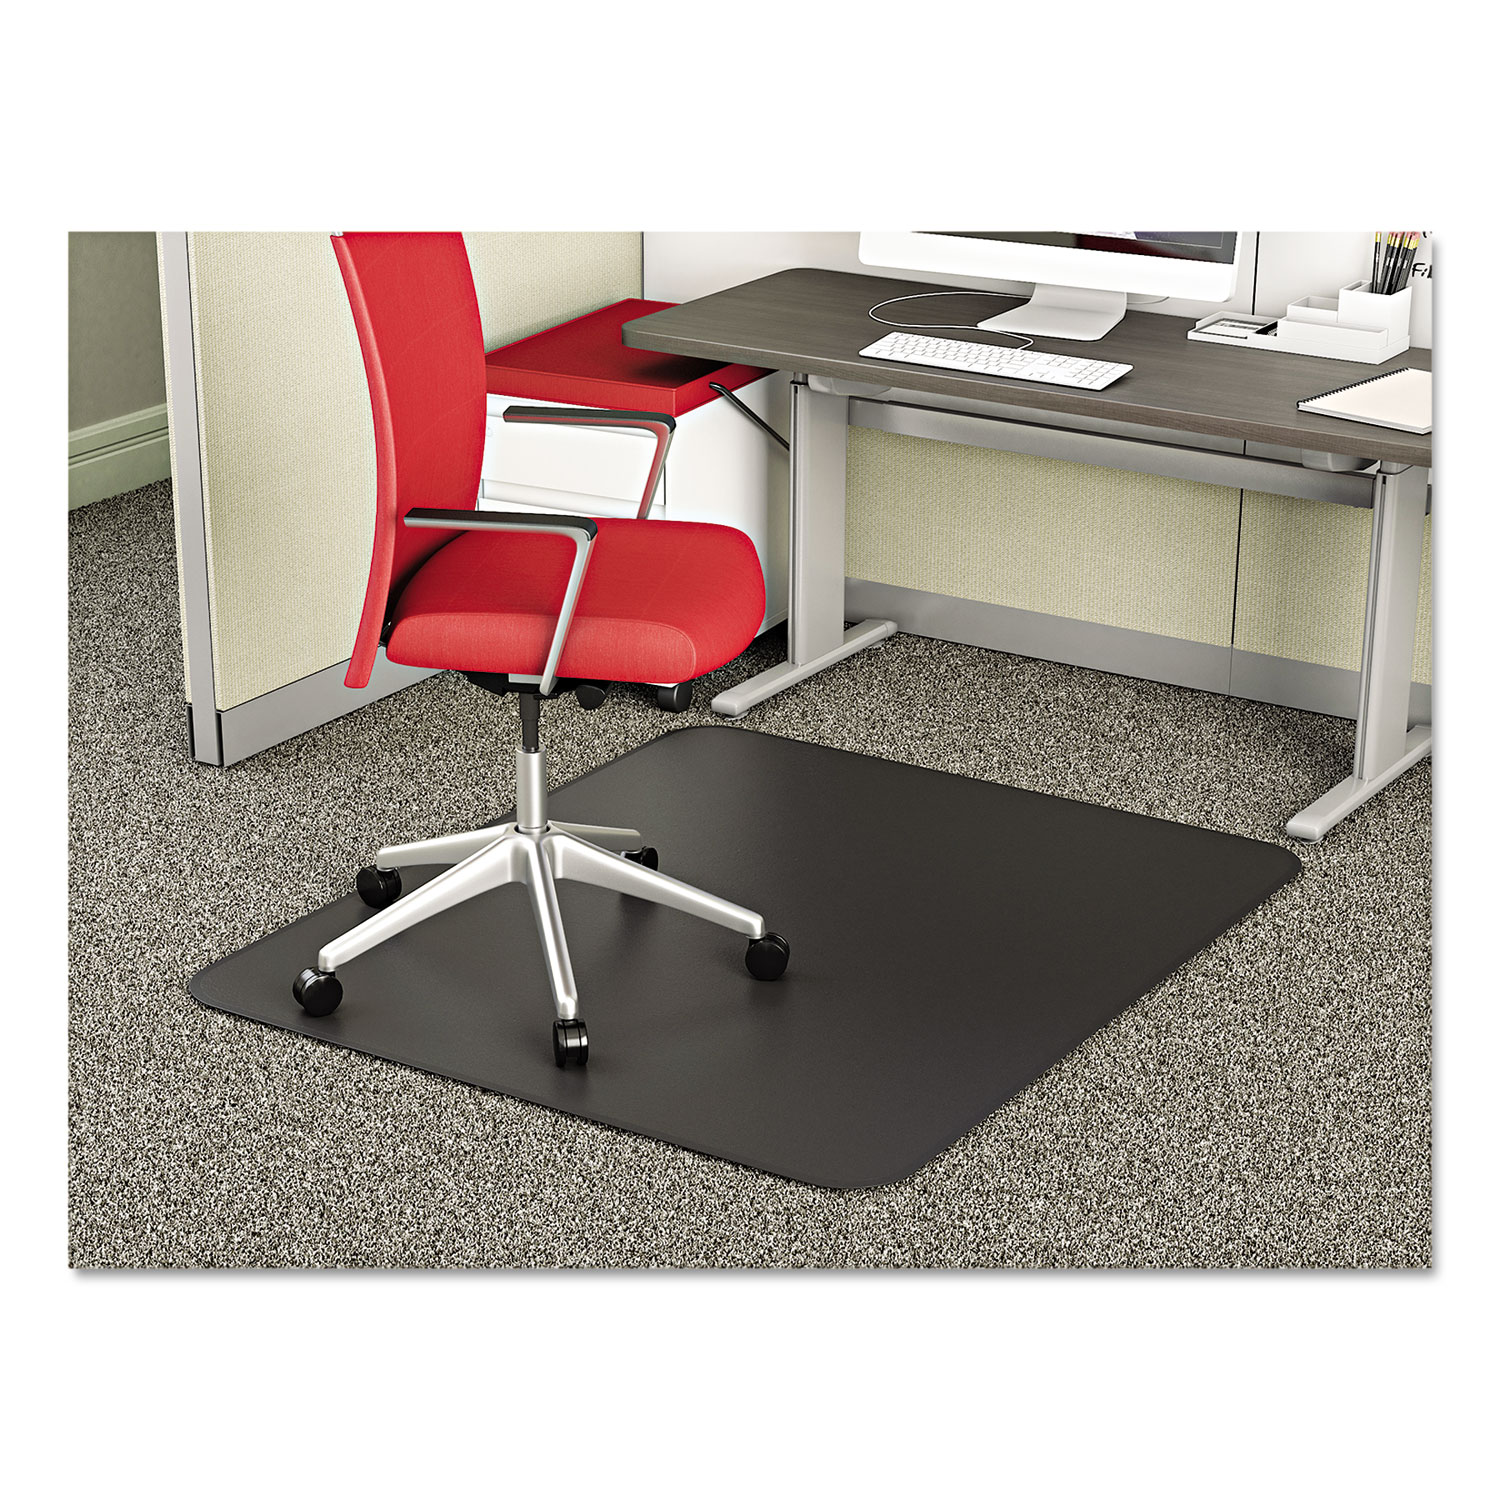  deflecto CM14142BLK SuperMat Frequent Use Chair Mat for Medium Pile Carpet, 36 x 48, Rectangular, Black (DEFCM14142BLK) 